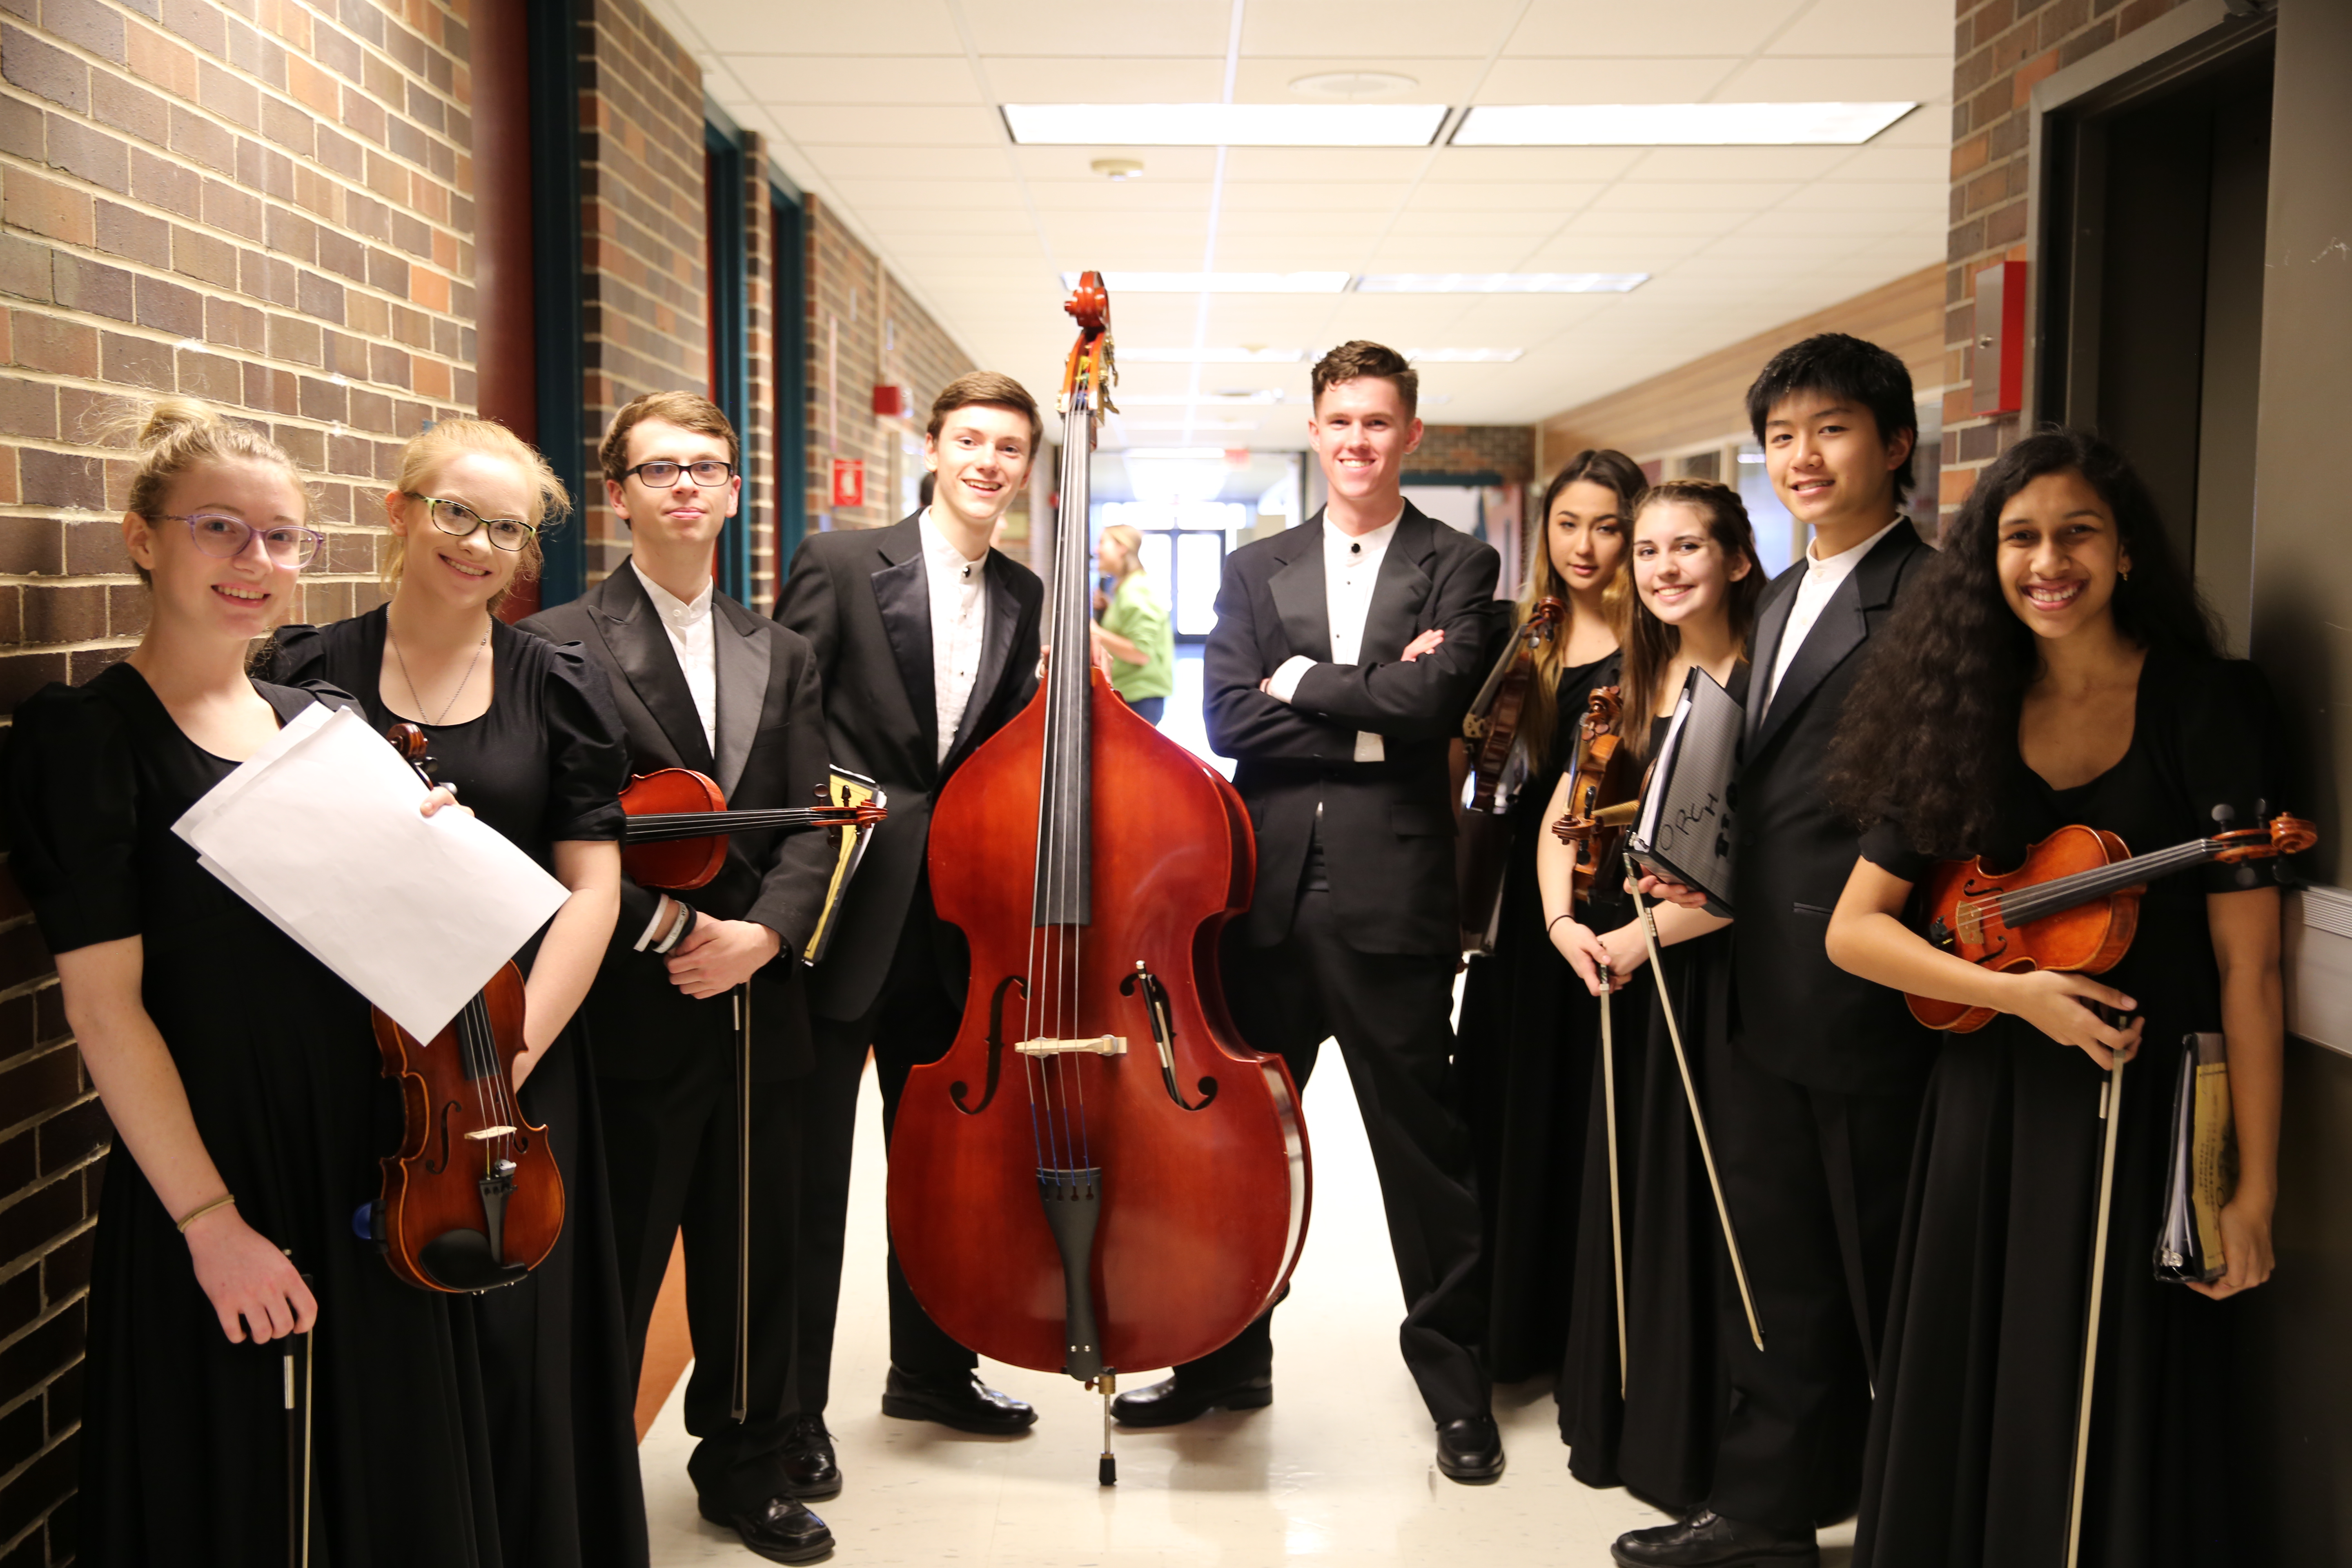 Penn High School Orchestra students